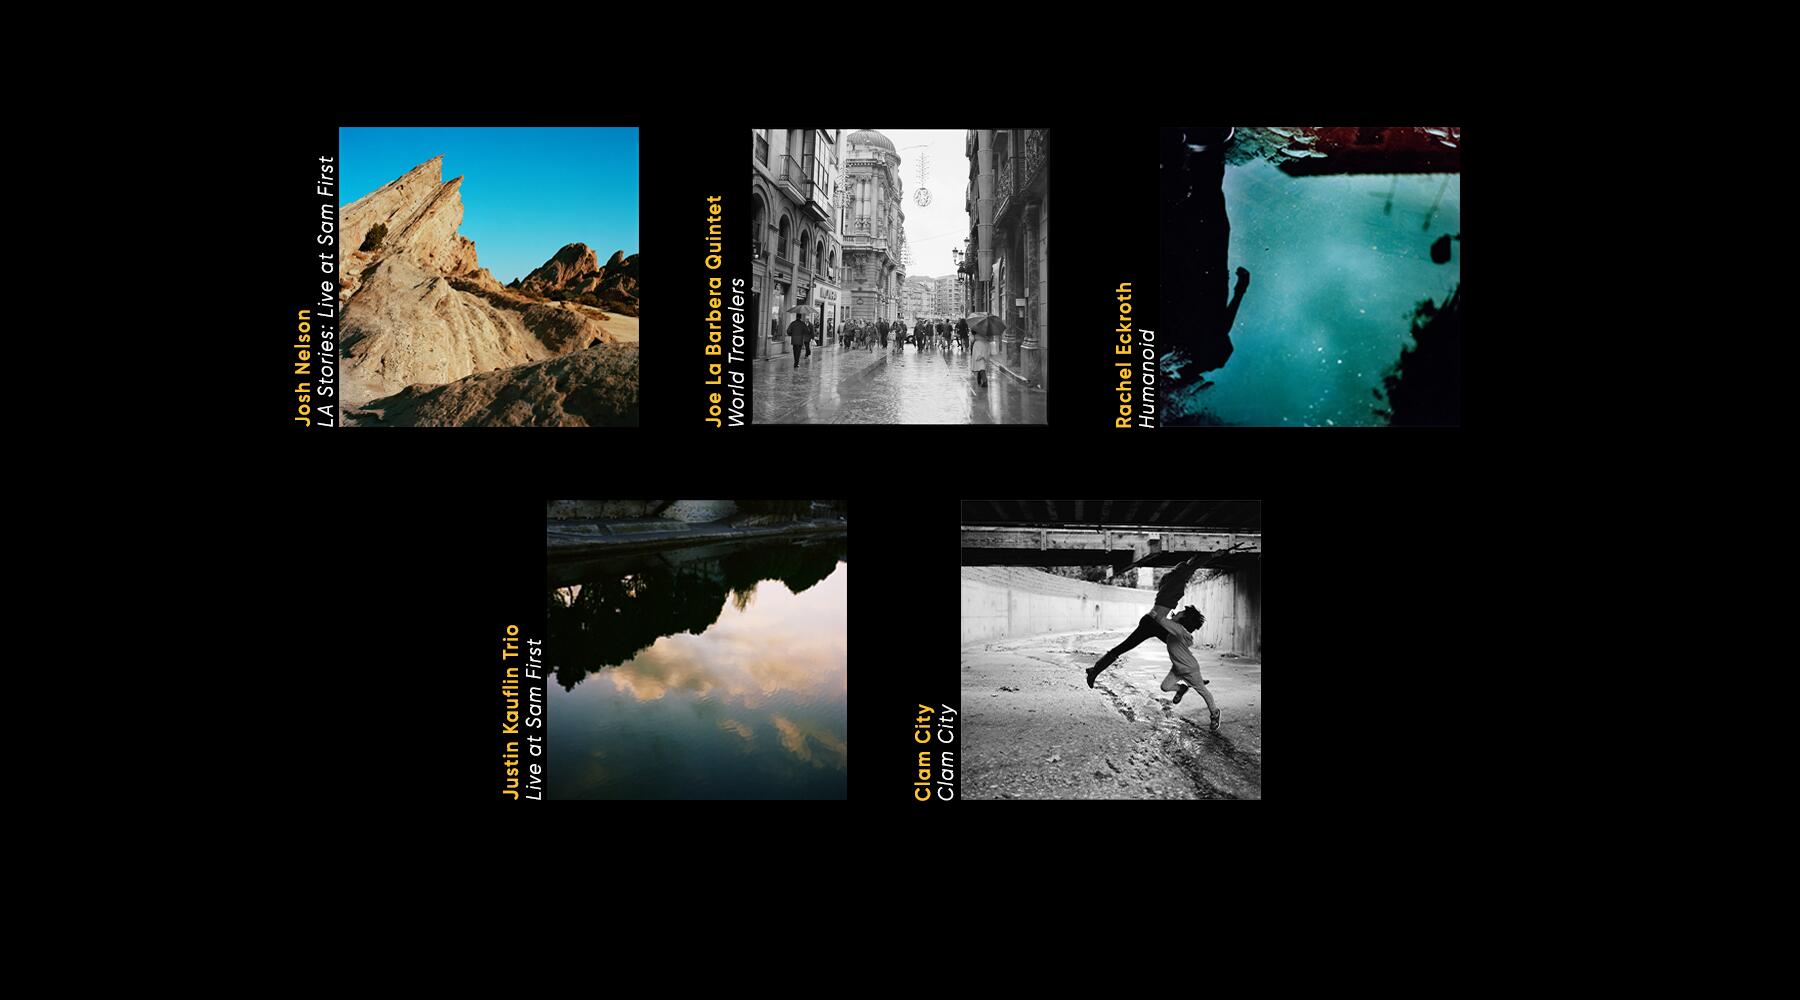 Five album covers